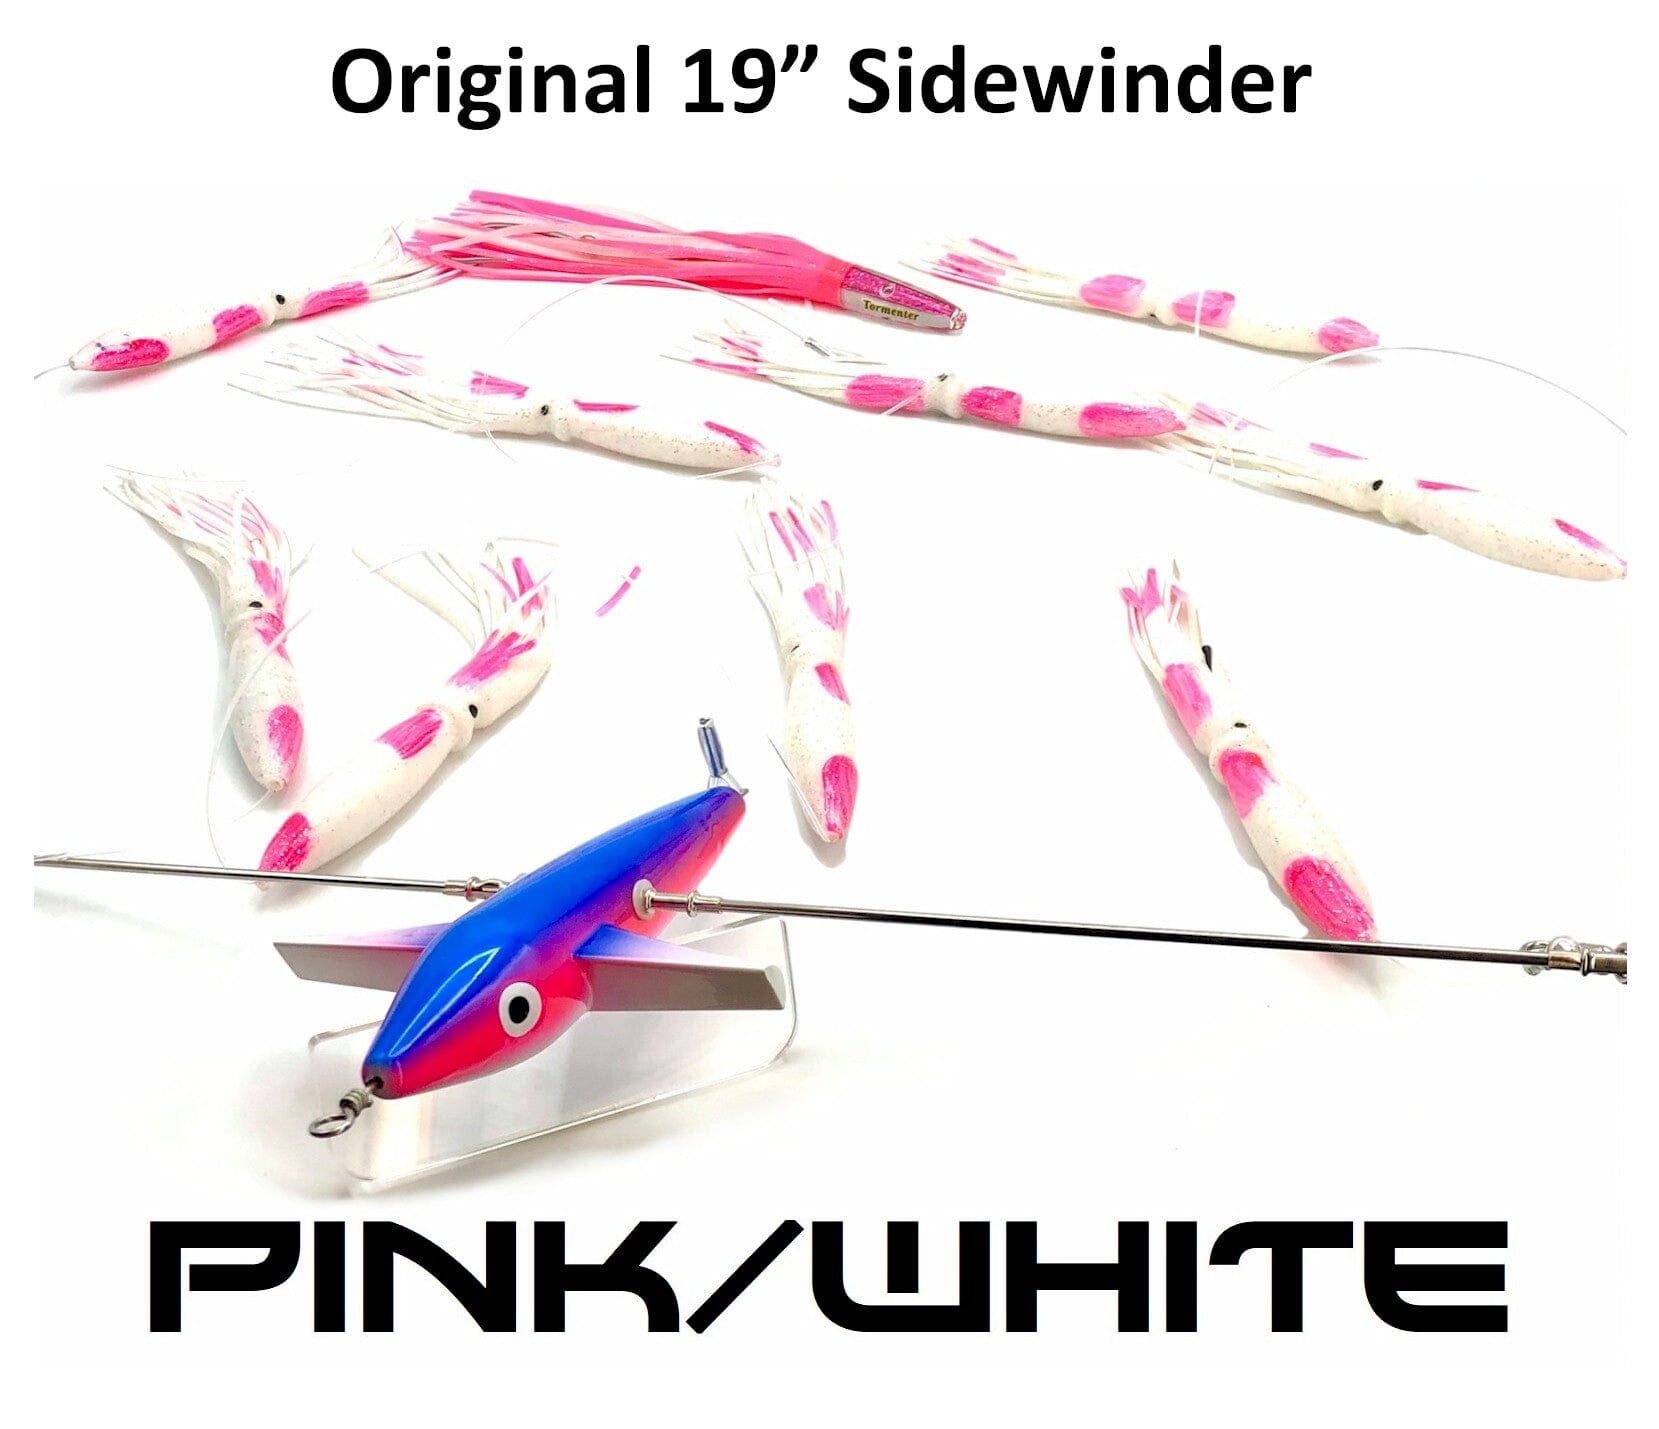 19" Sidewinder Directional Bar - Original Daisy Chains & Multi Bait Rigs Tormenter Ocean Pink/White Port 